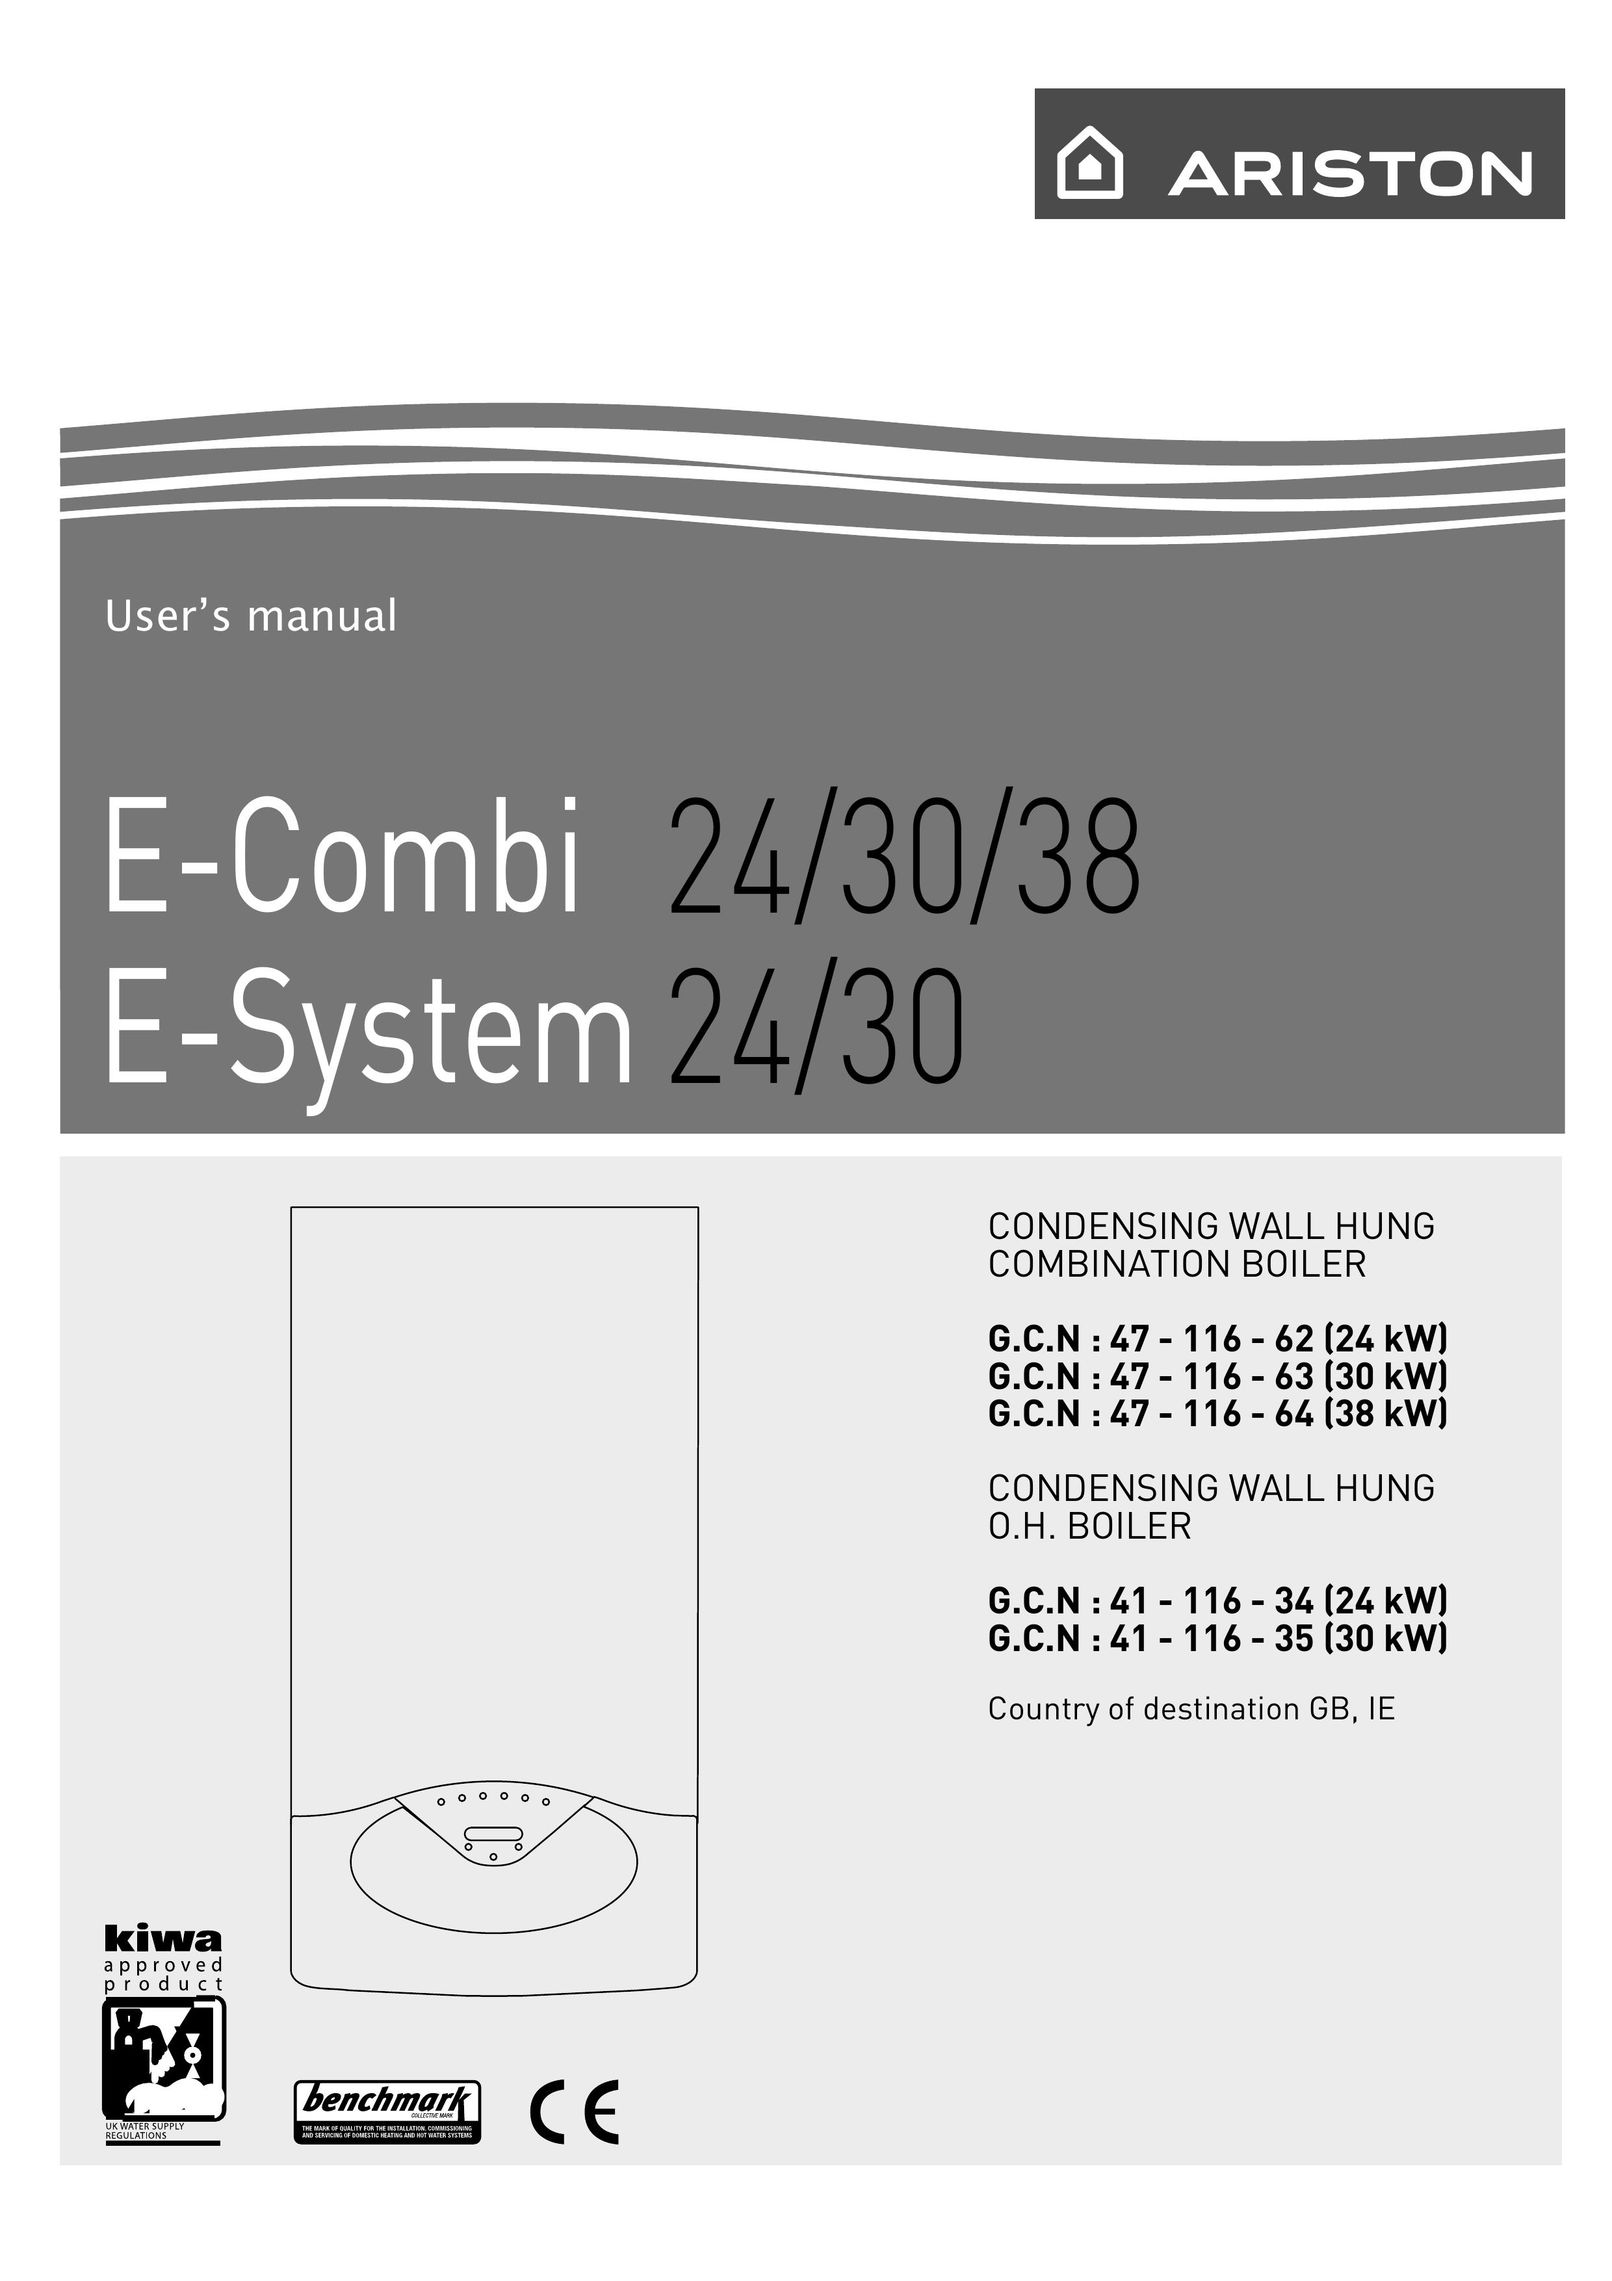 Ariston 47 - 116 - 64 Boiler User Manual